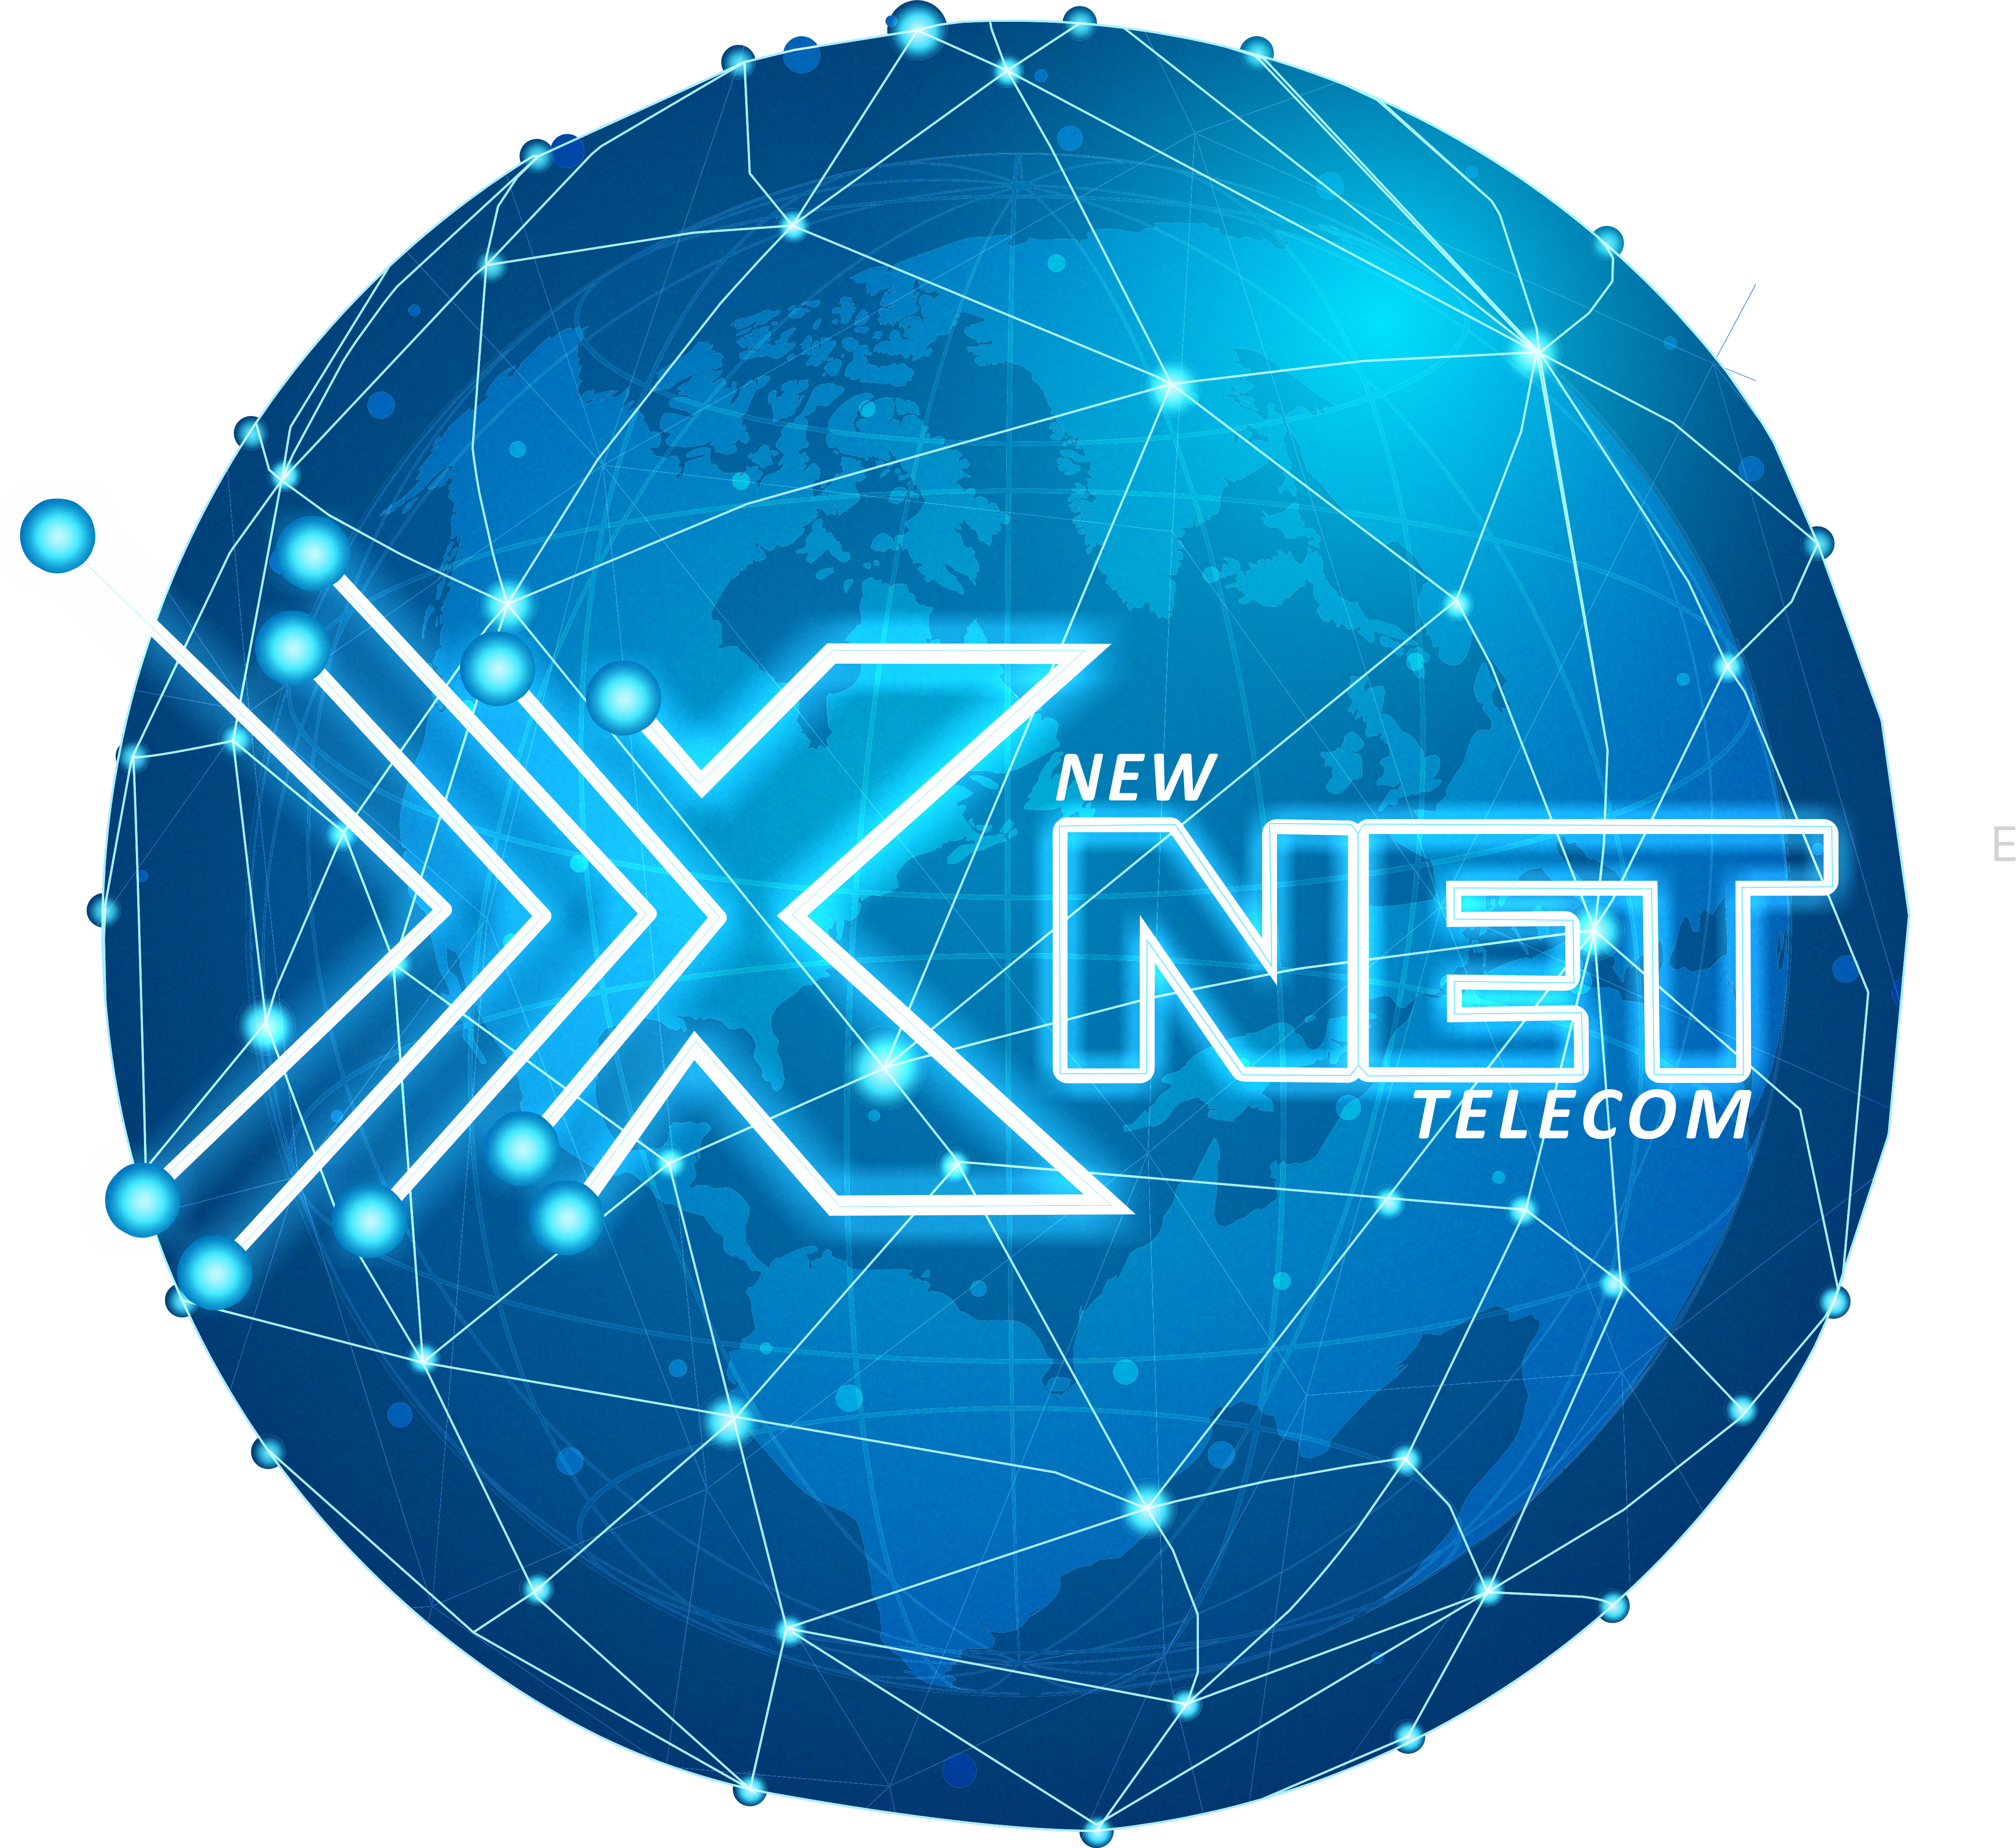 X Net New Telecom